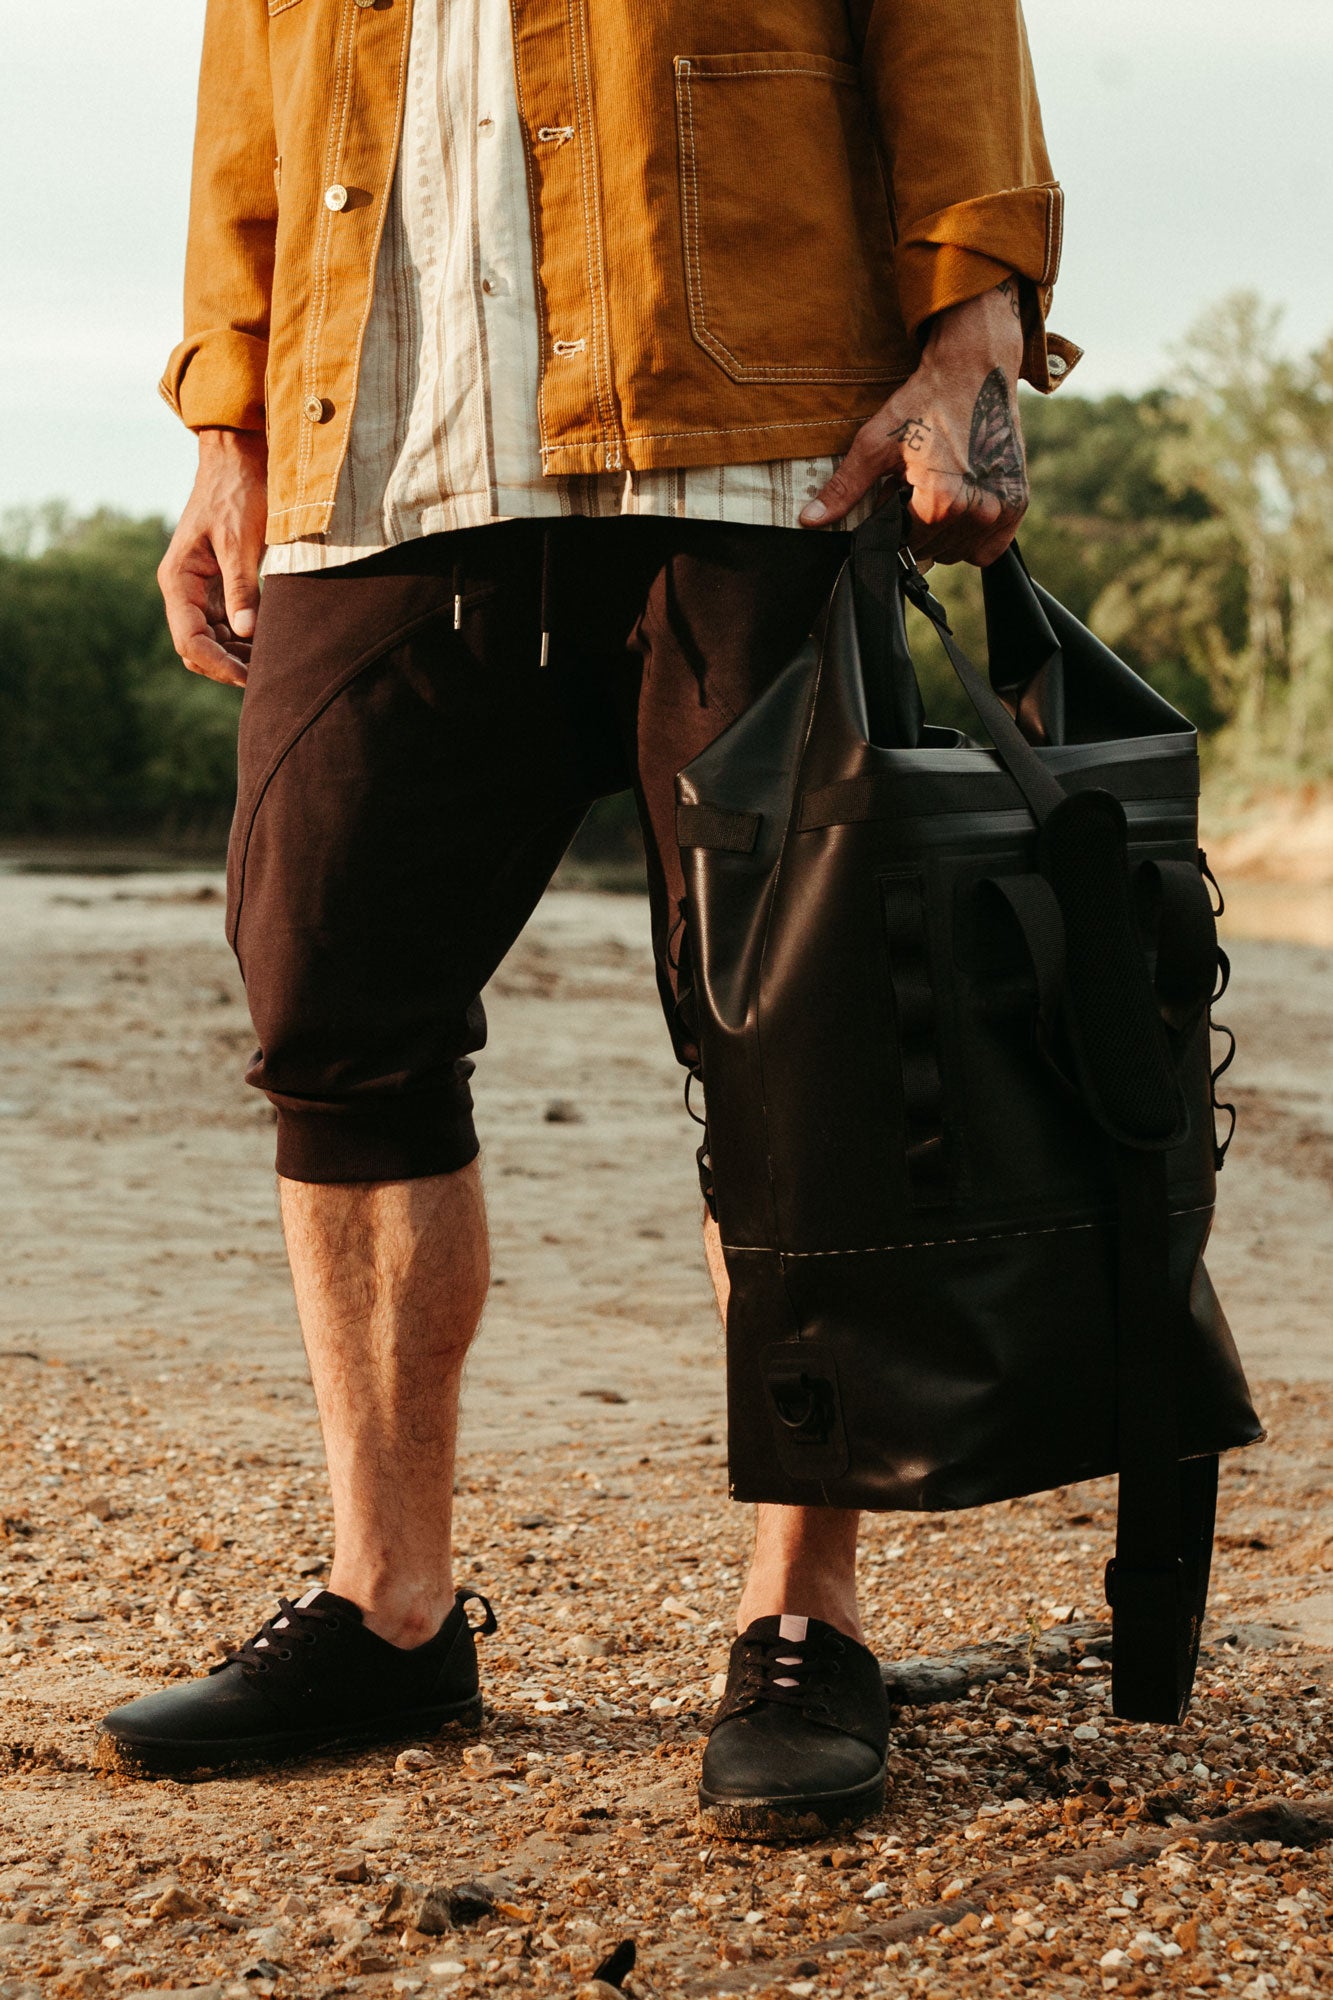 a man carries the on the roam x so ill dirtbag on a climbing trip